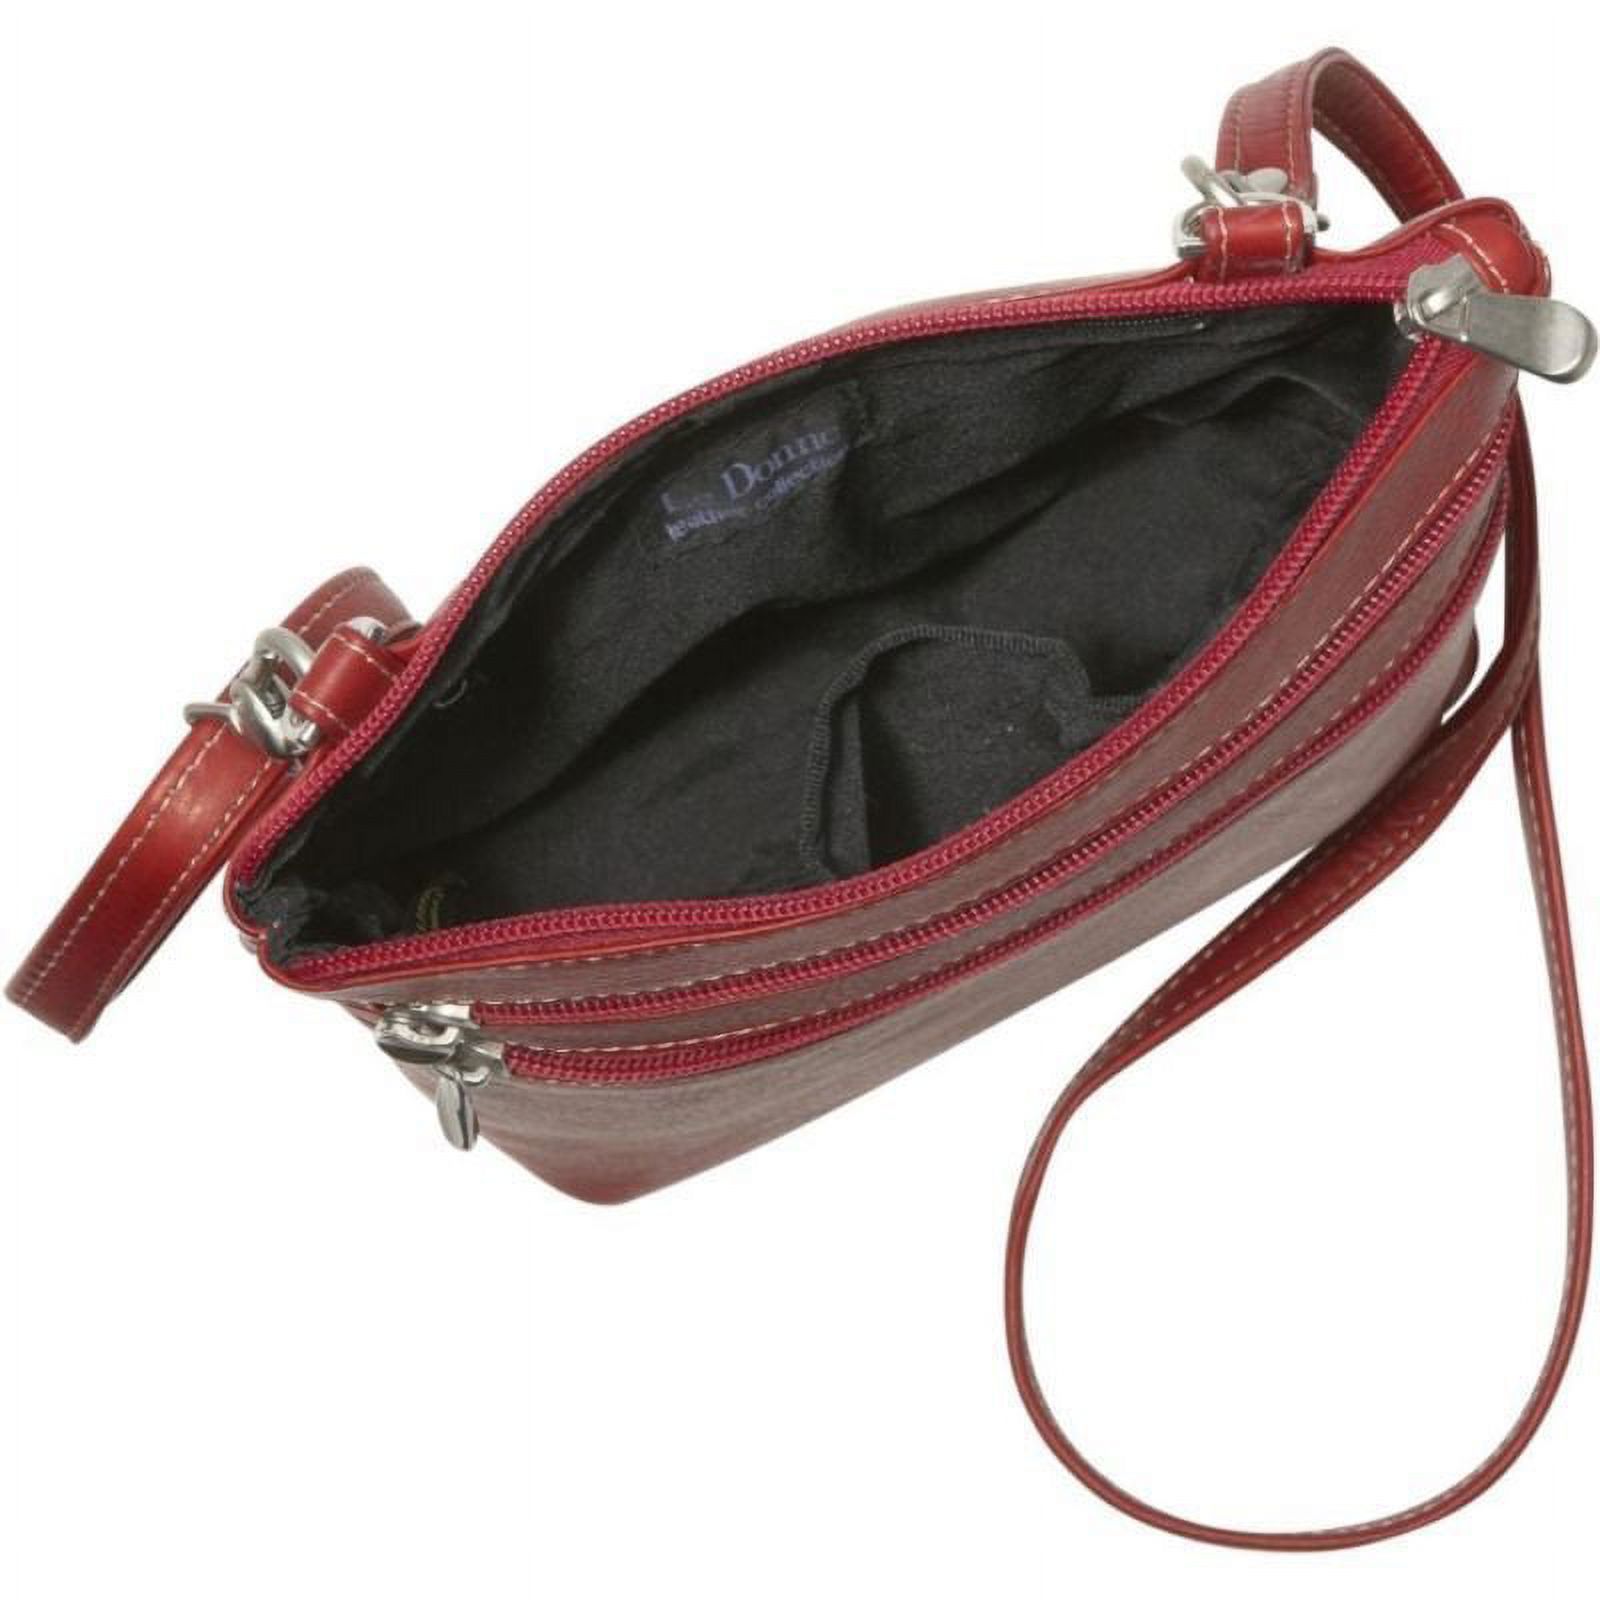 LeDonne  Leather 3-zipper Crossbody Handbag - image 2 of 5